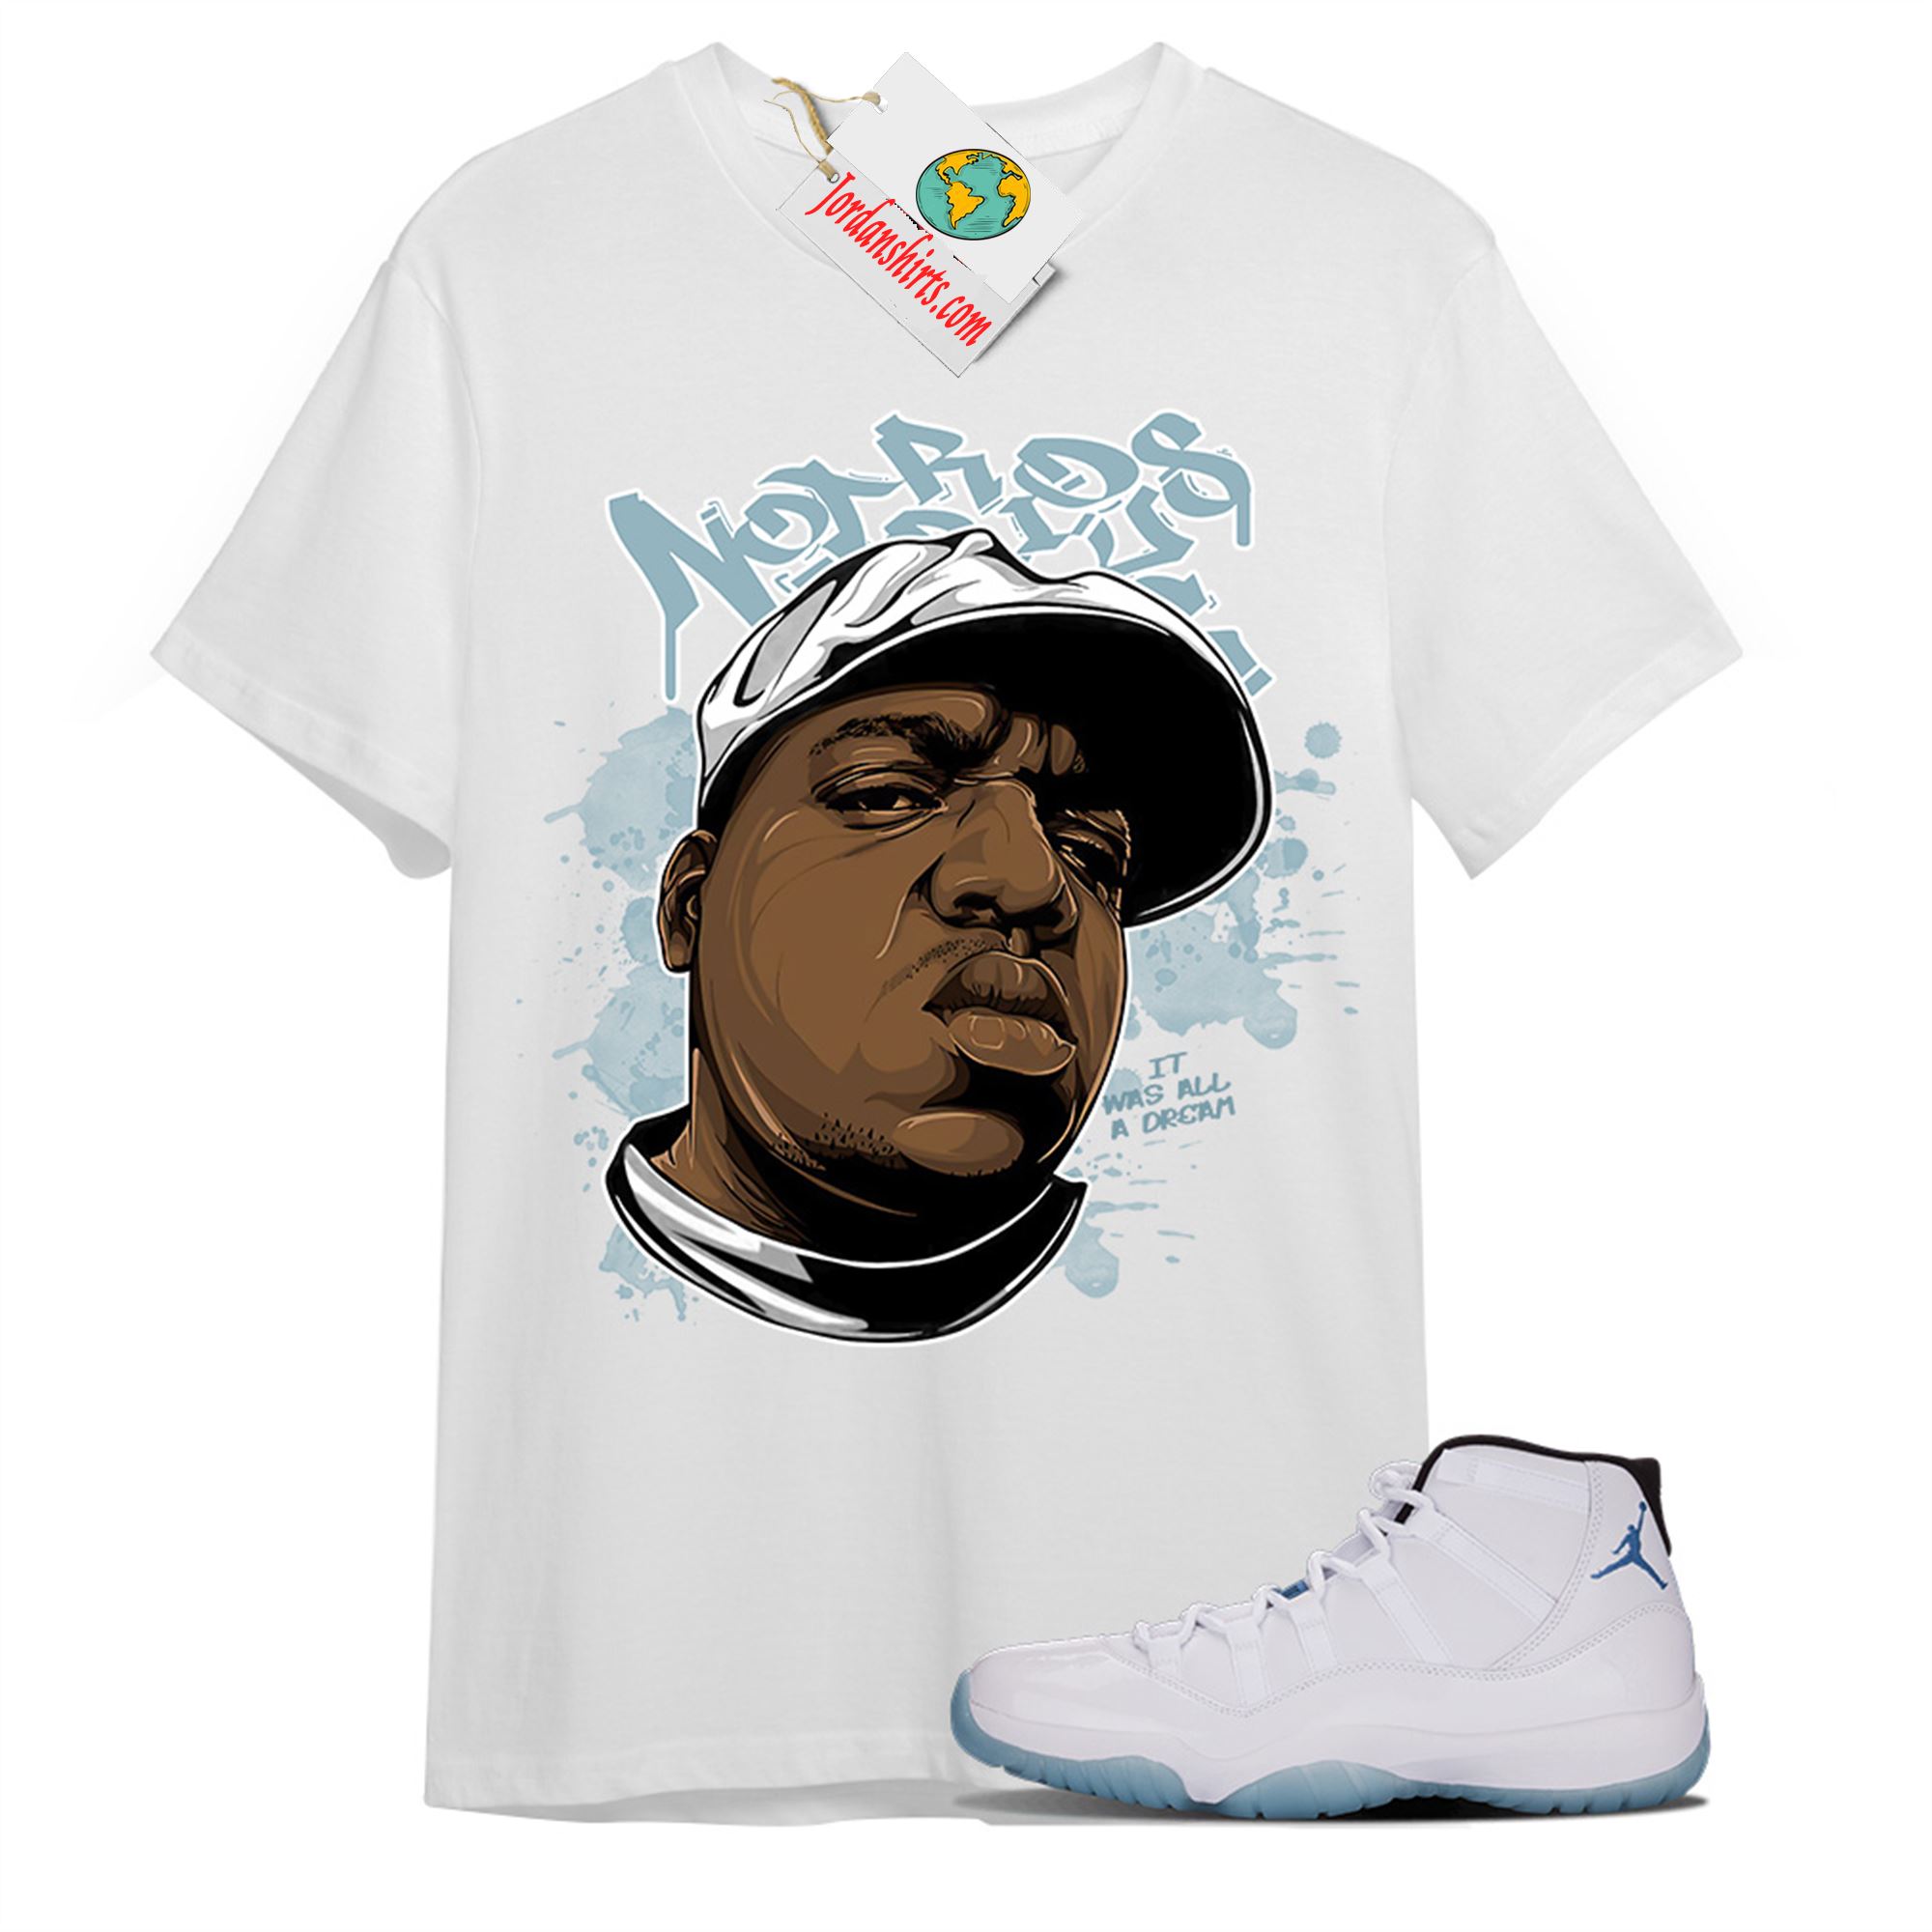 Jordan 11 Shirt, Notorious Big White T-shirt Air Jordan 11 Legend Blue 11s Full Size Up To 5xl